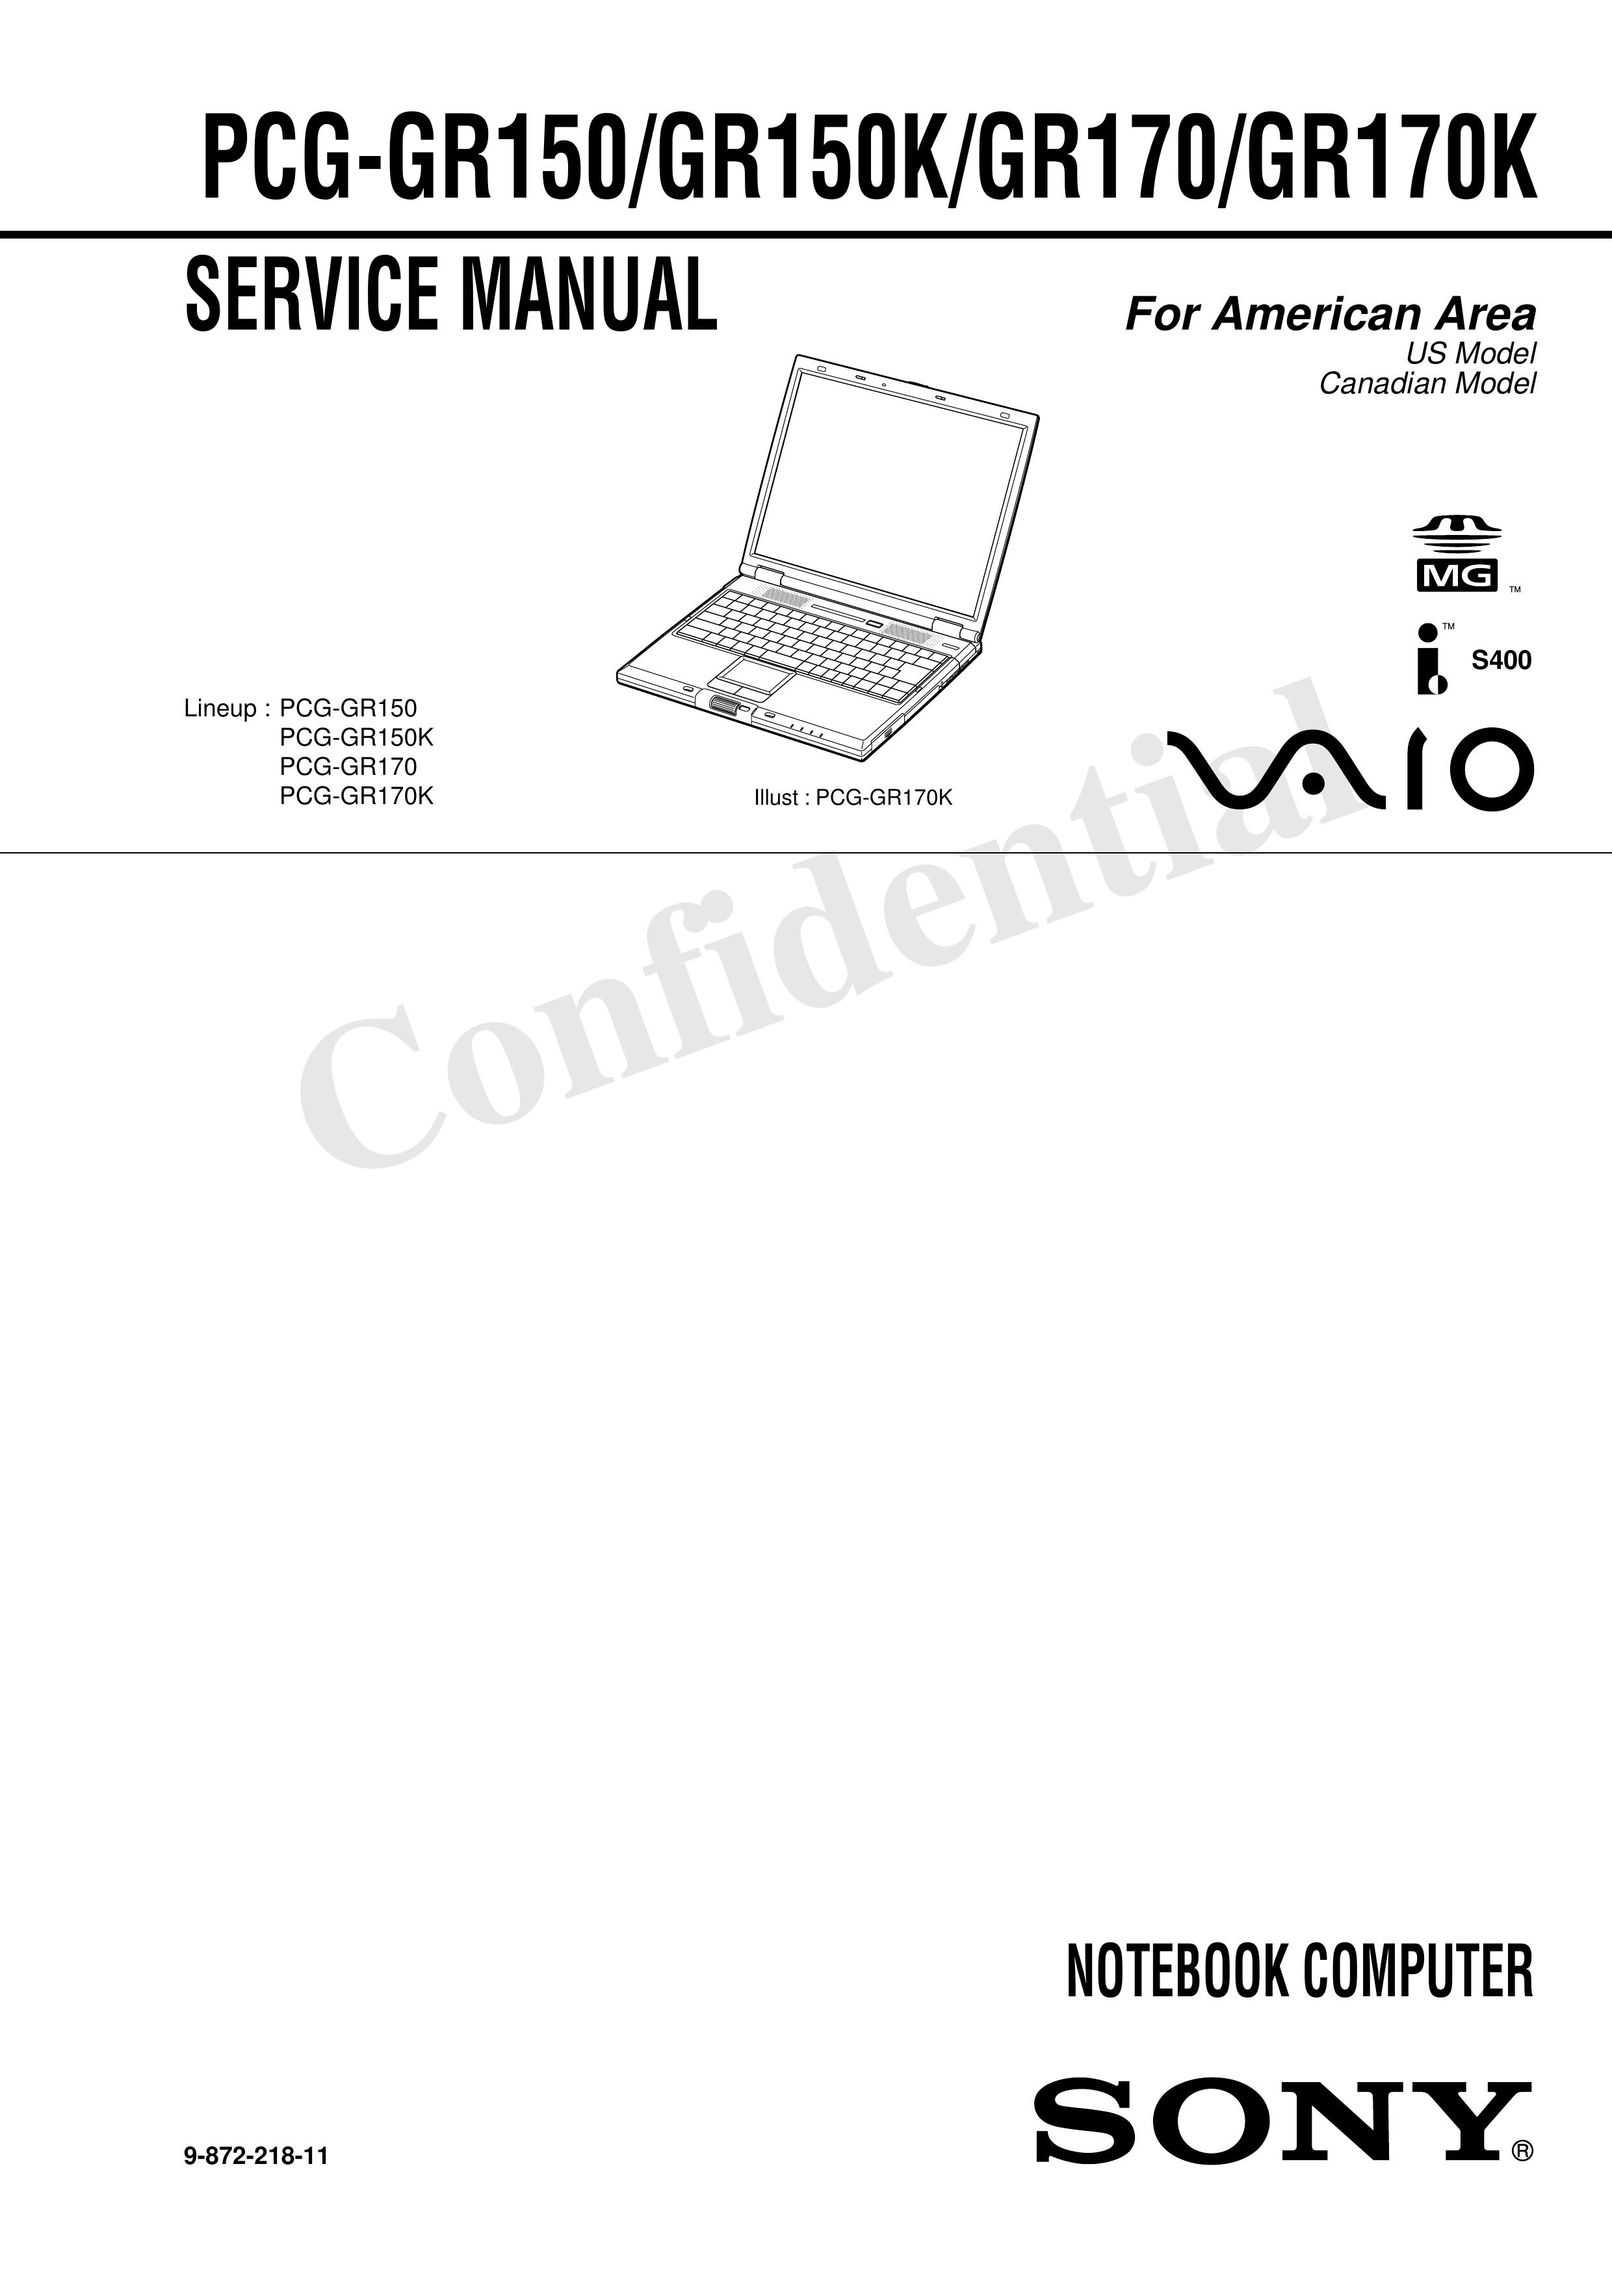 Sony GR170 Laptop User Manual